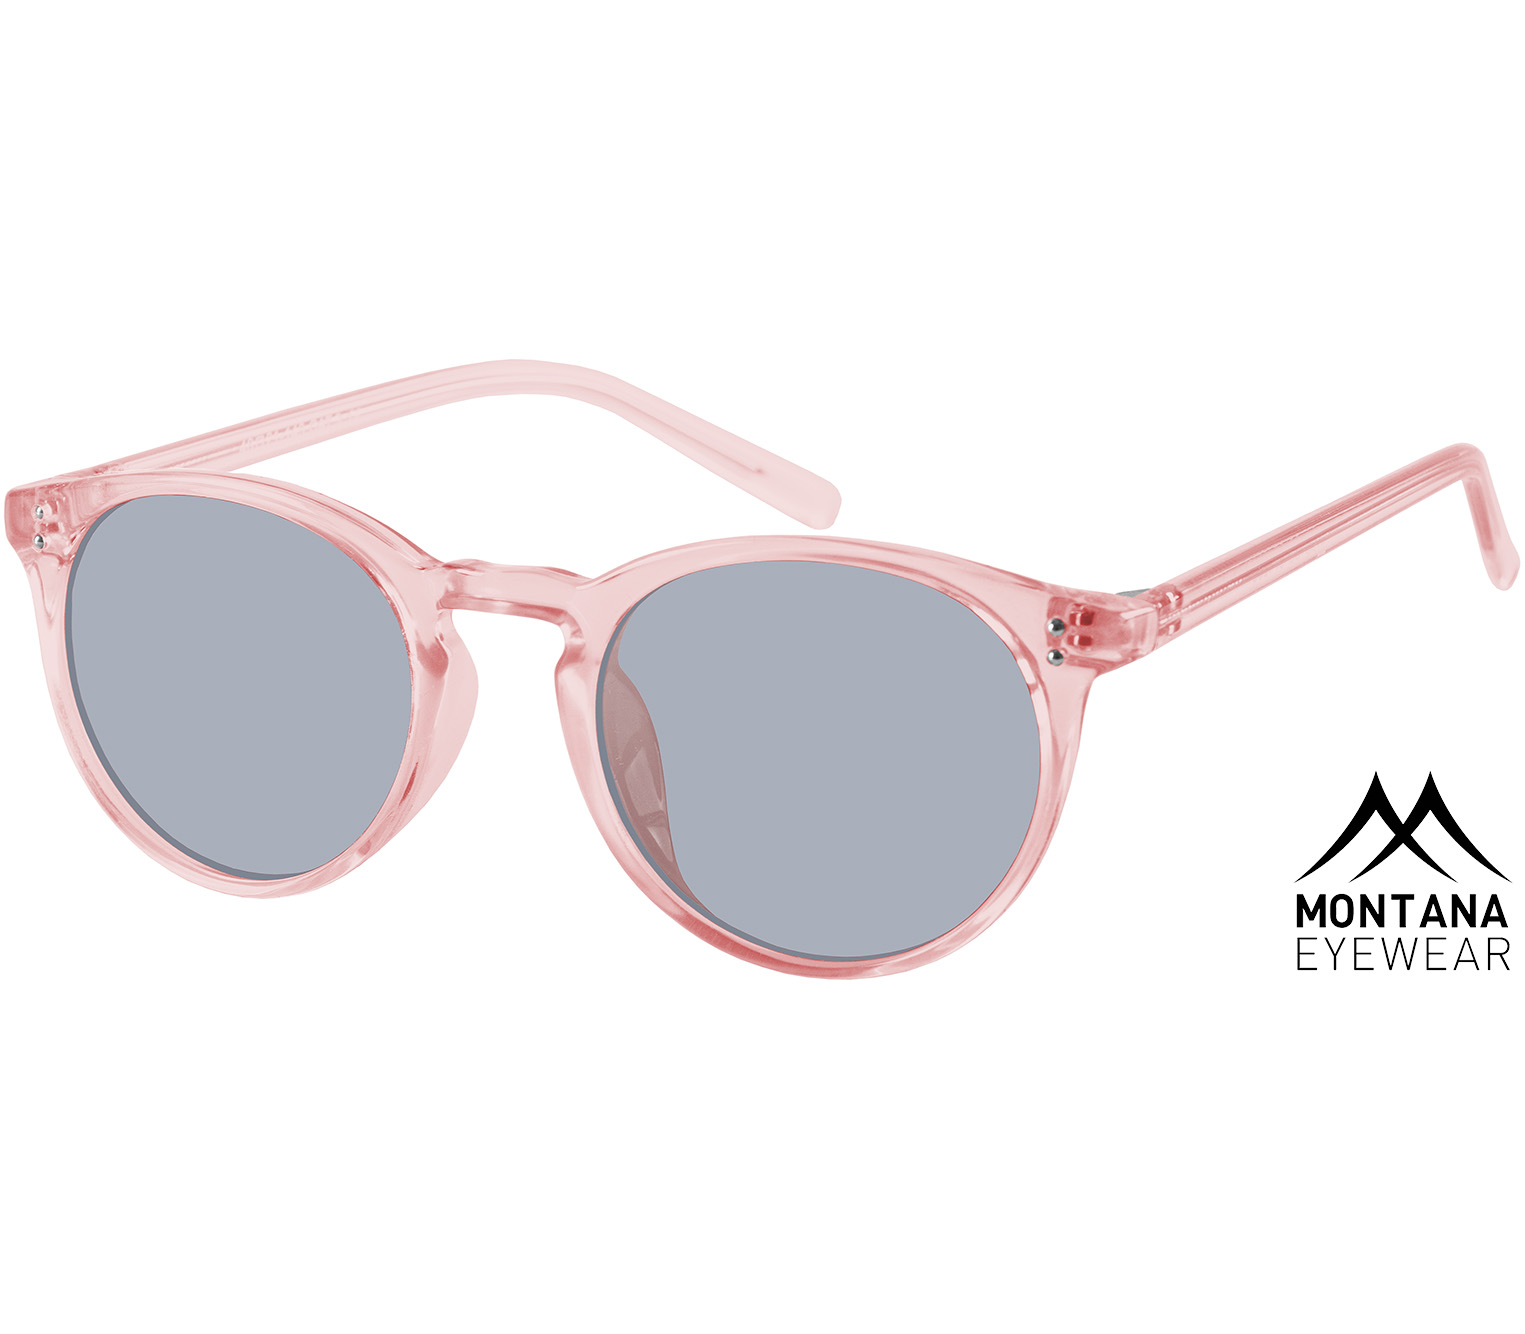 Main Image (Angle) - Alaska (Pink) Retro Sunglasses